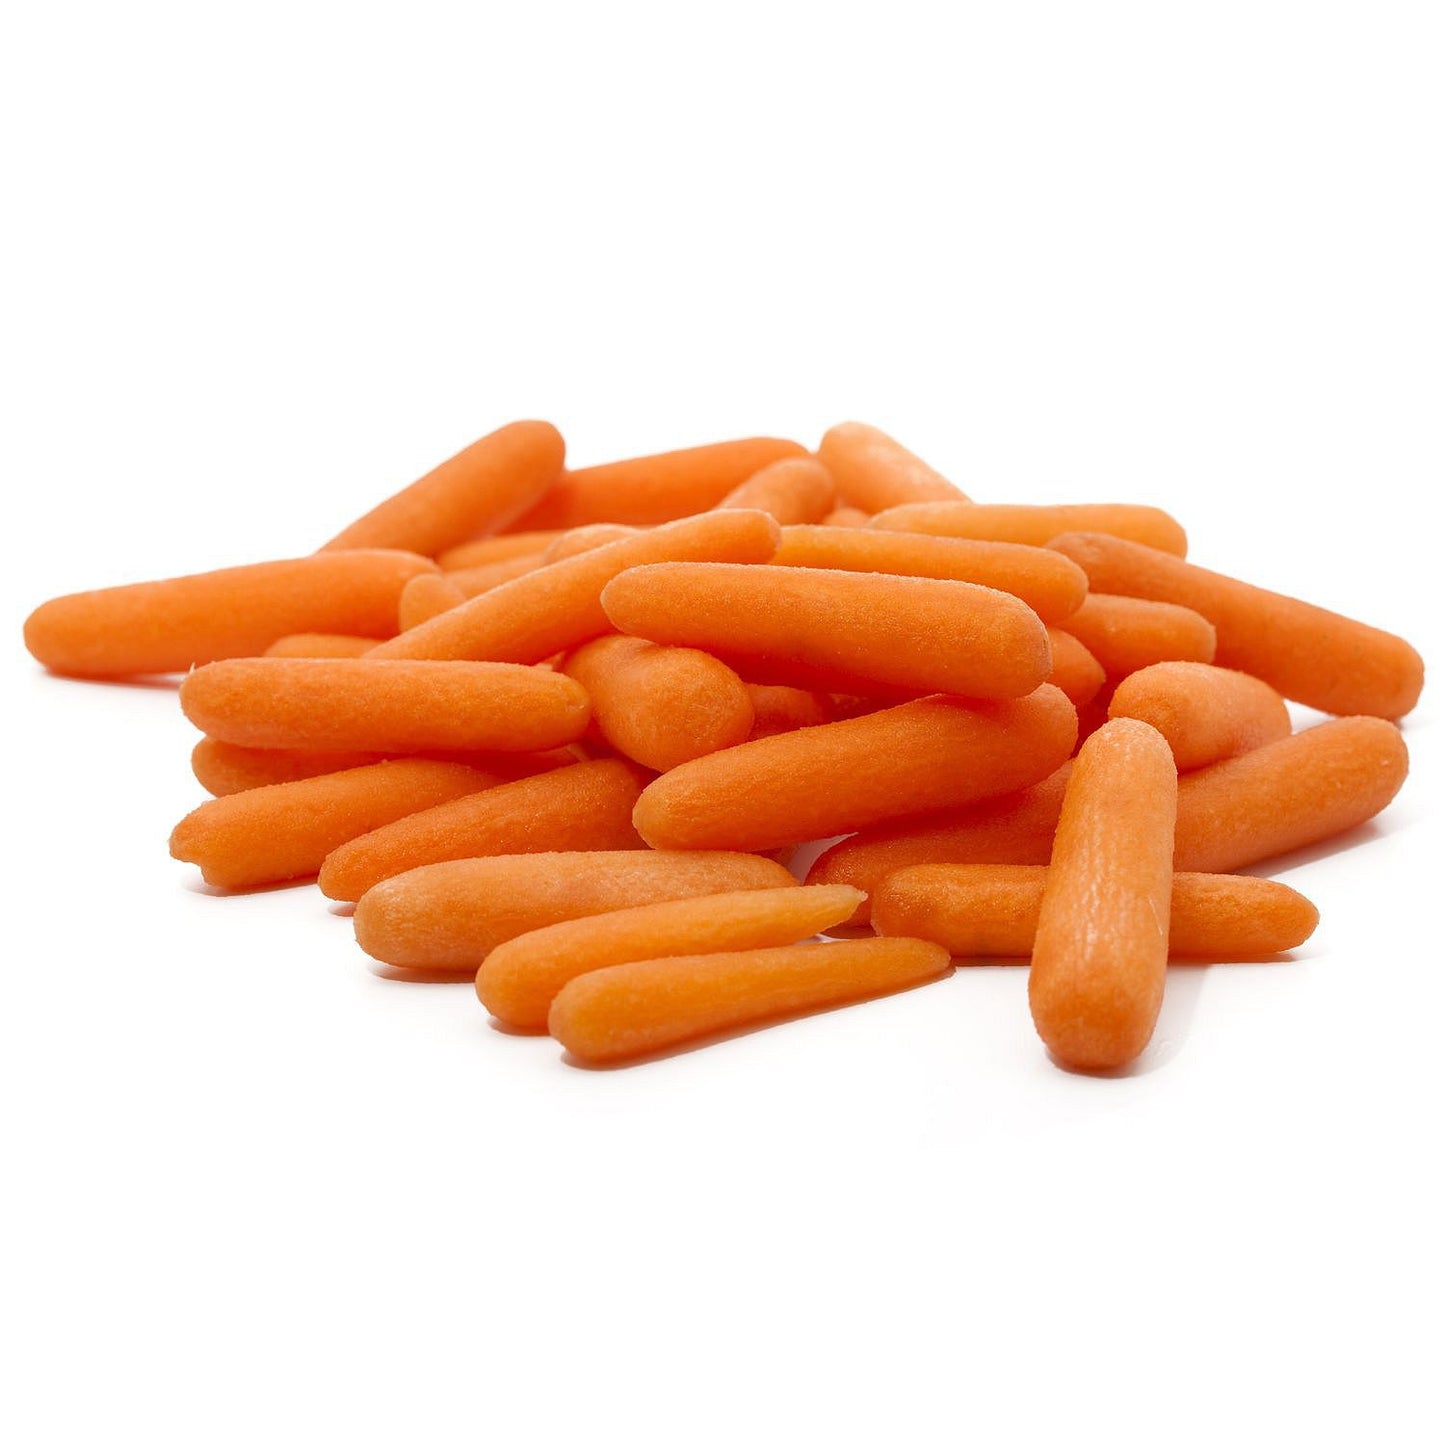 Organic Petite Carrot (3 lb.)